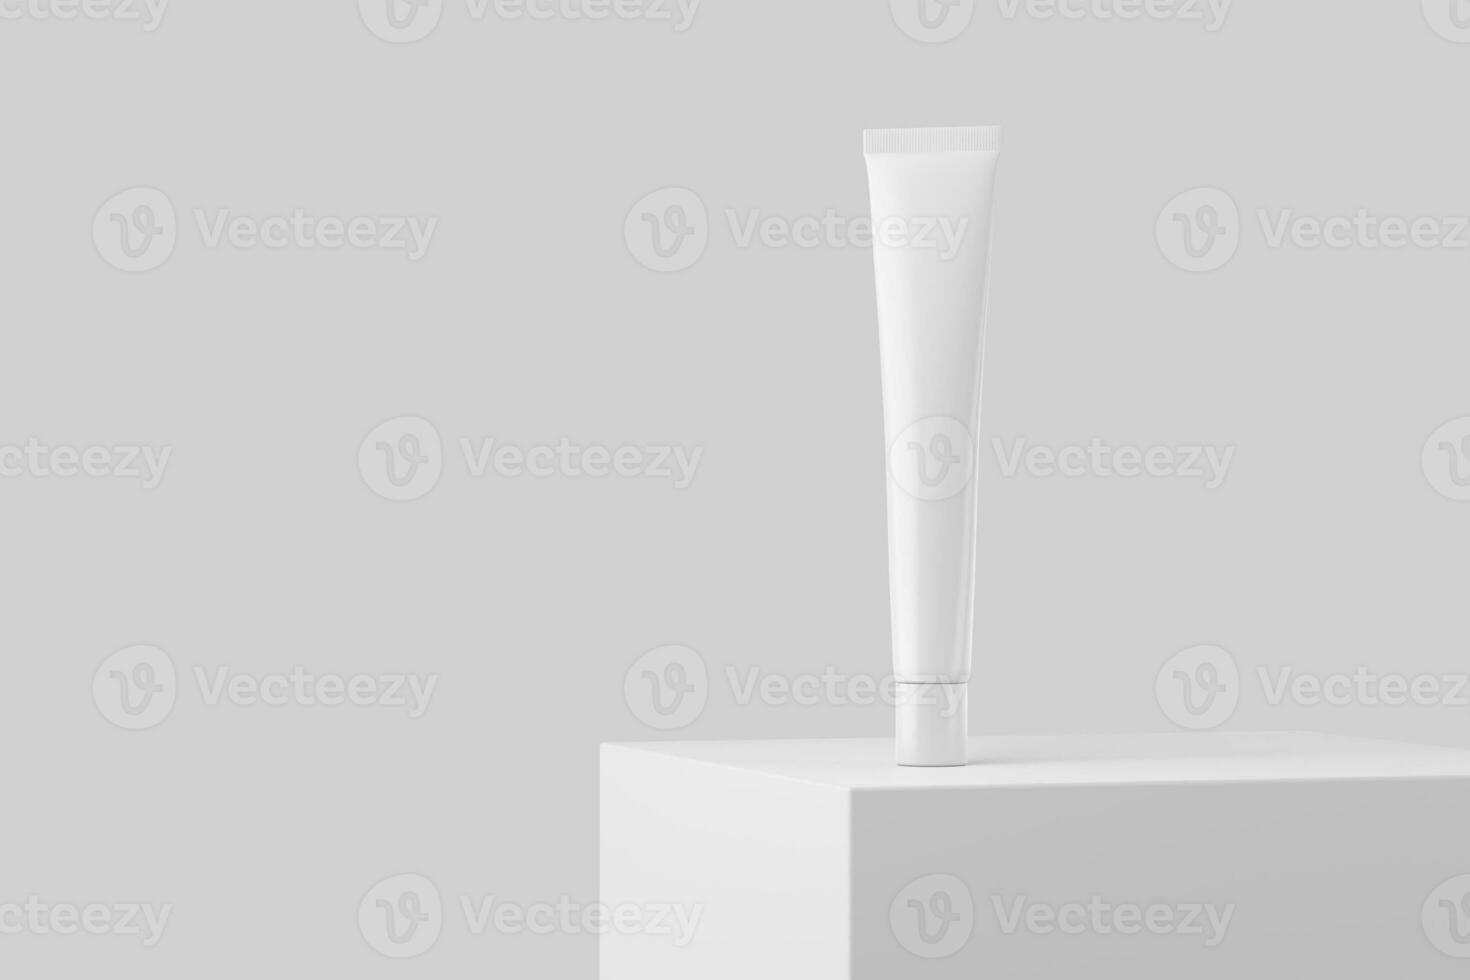 Cosmetics Bottle Jar Packaging 3D Rendering White Blank Mockup photo